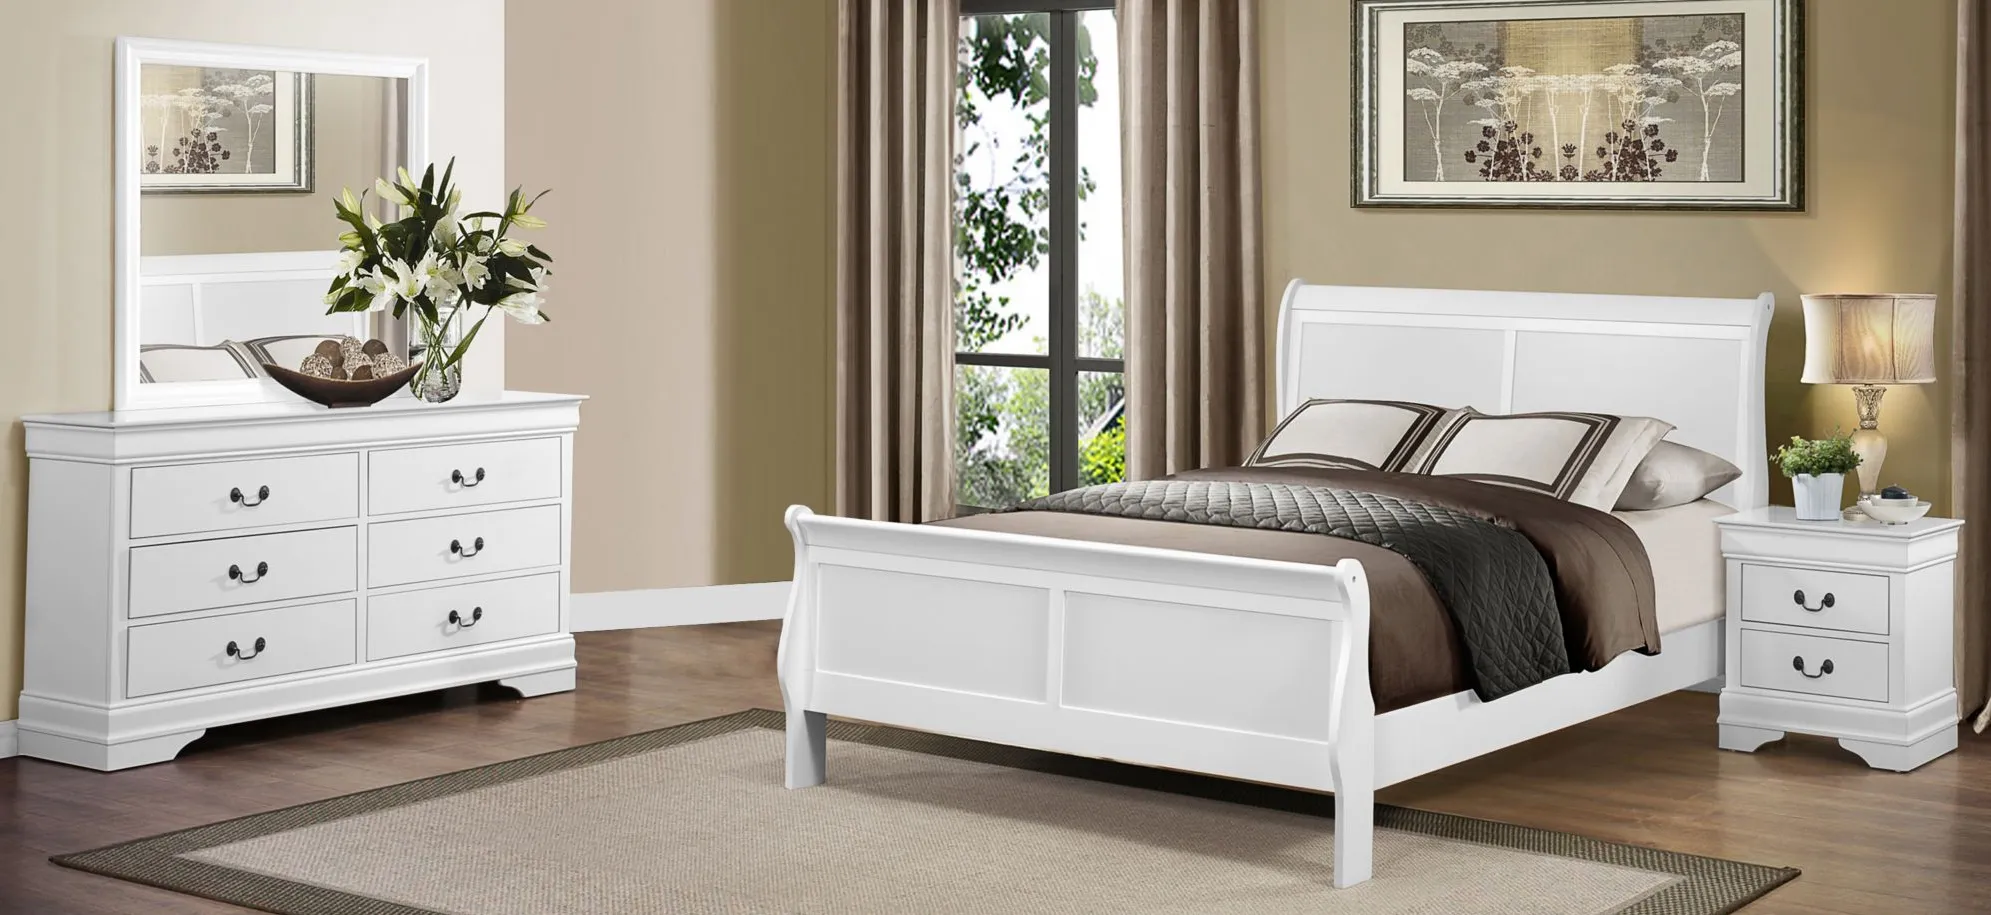 Edina 4-pc. Bedroom Set in White by Homelegance